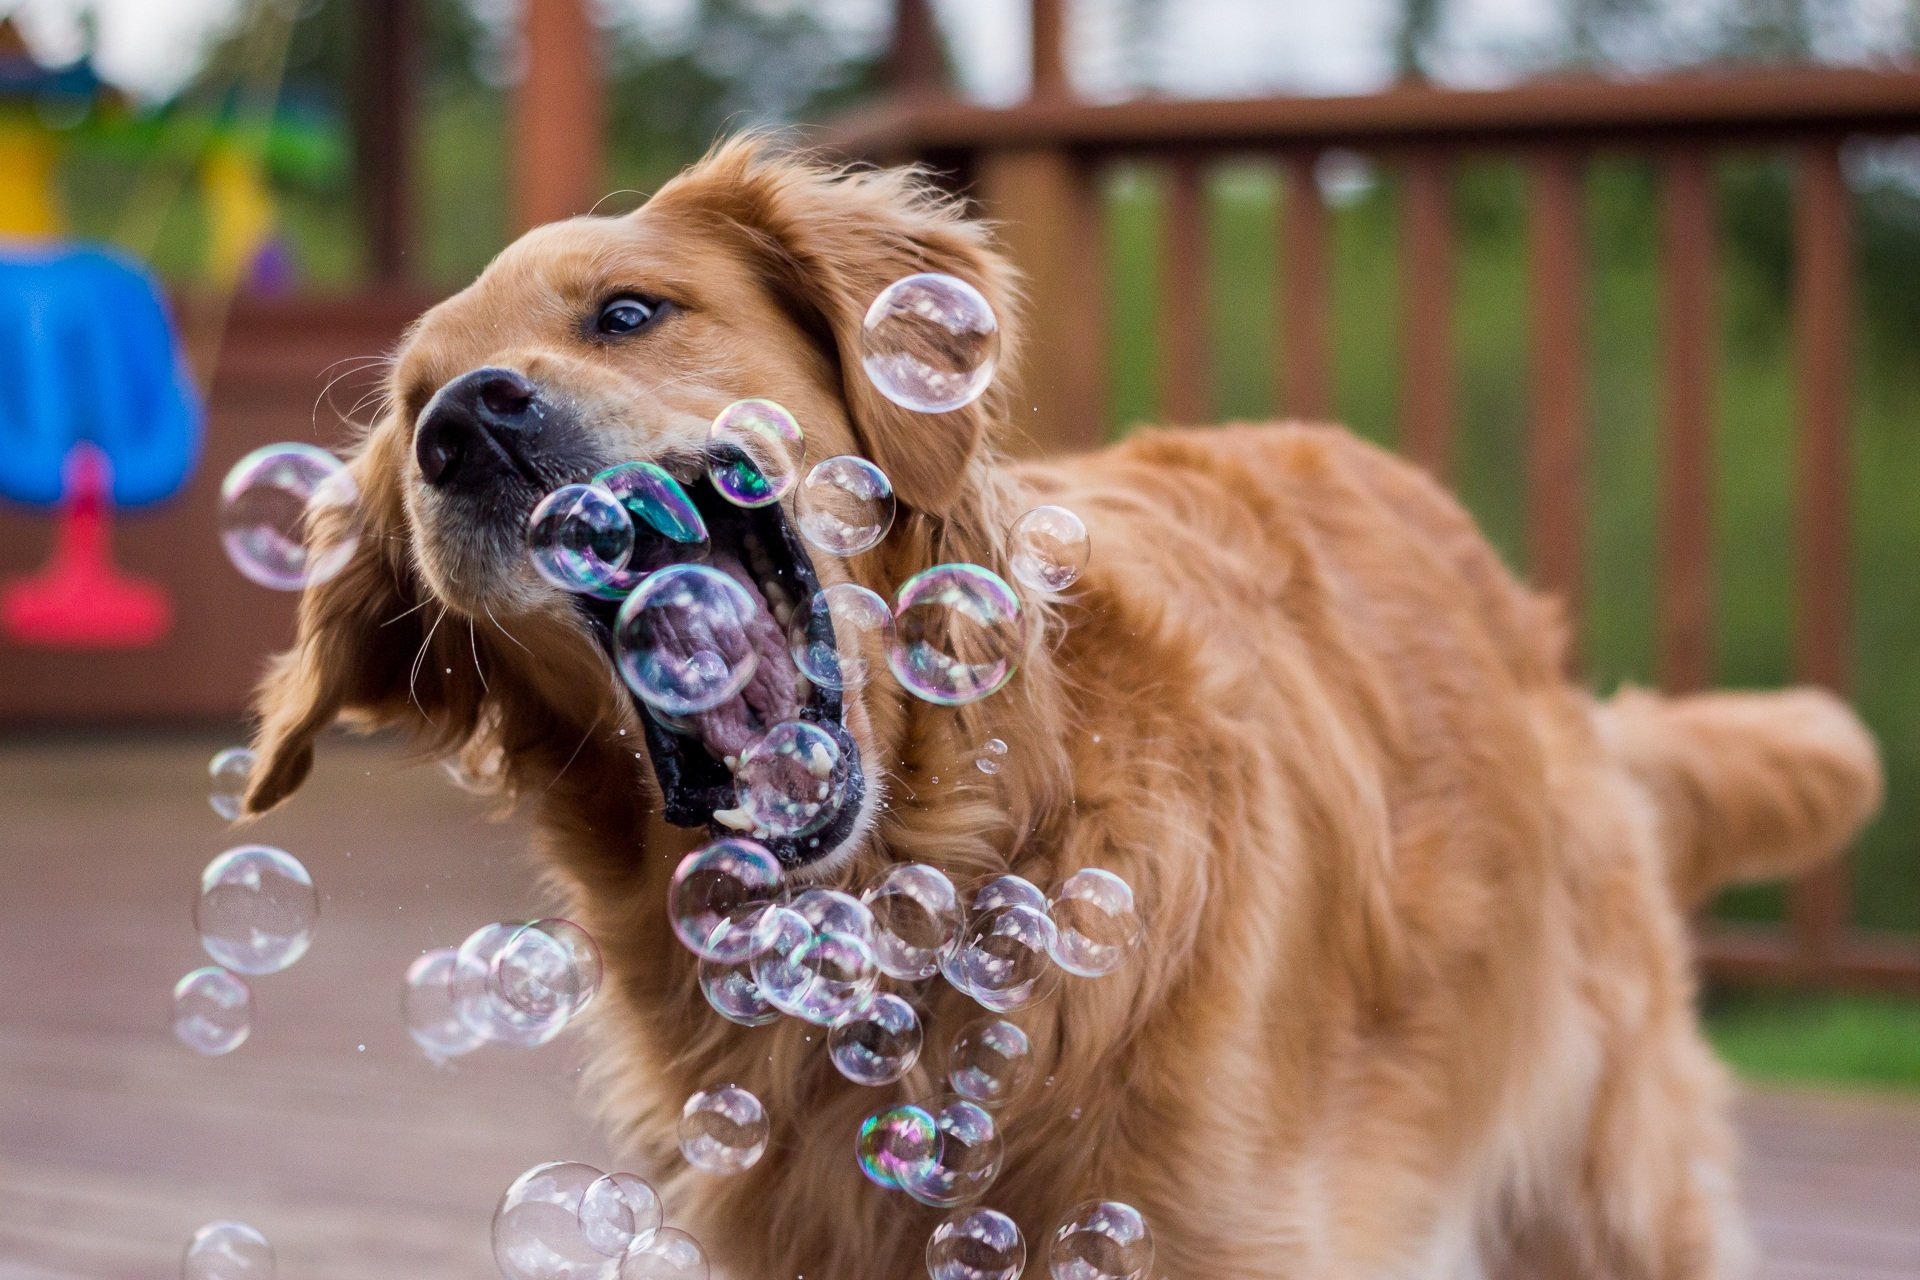 A Golden Retriever at the park catching Bubbles